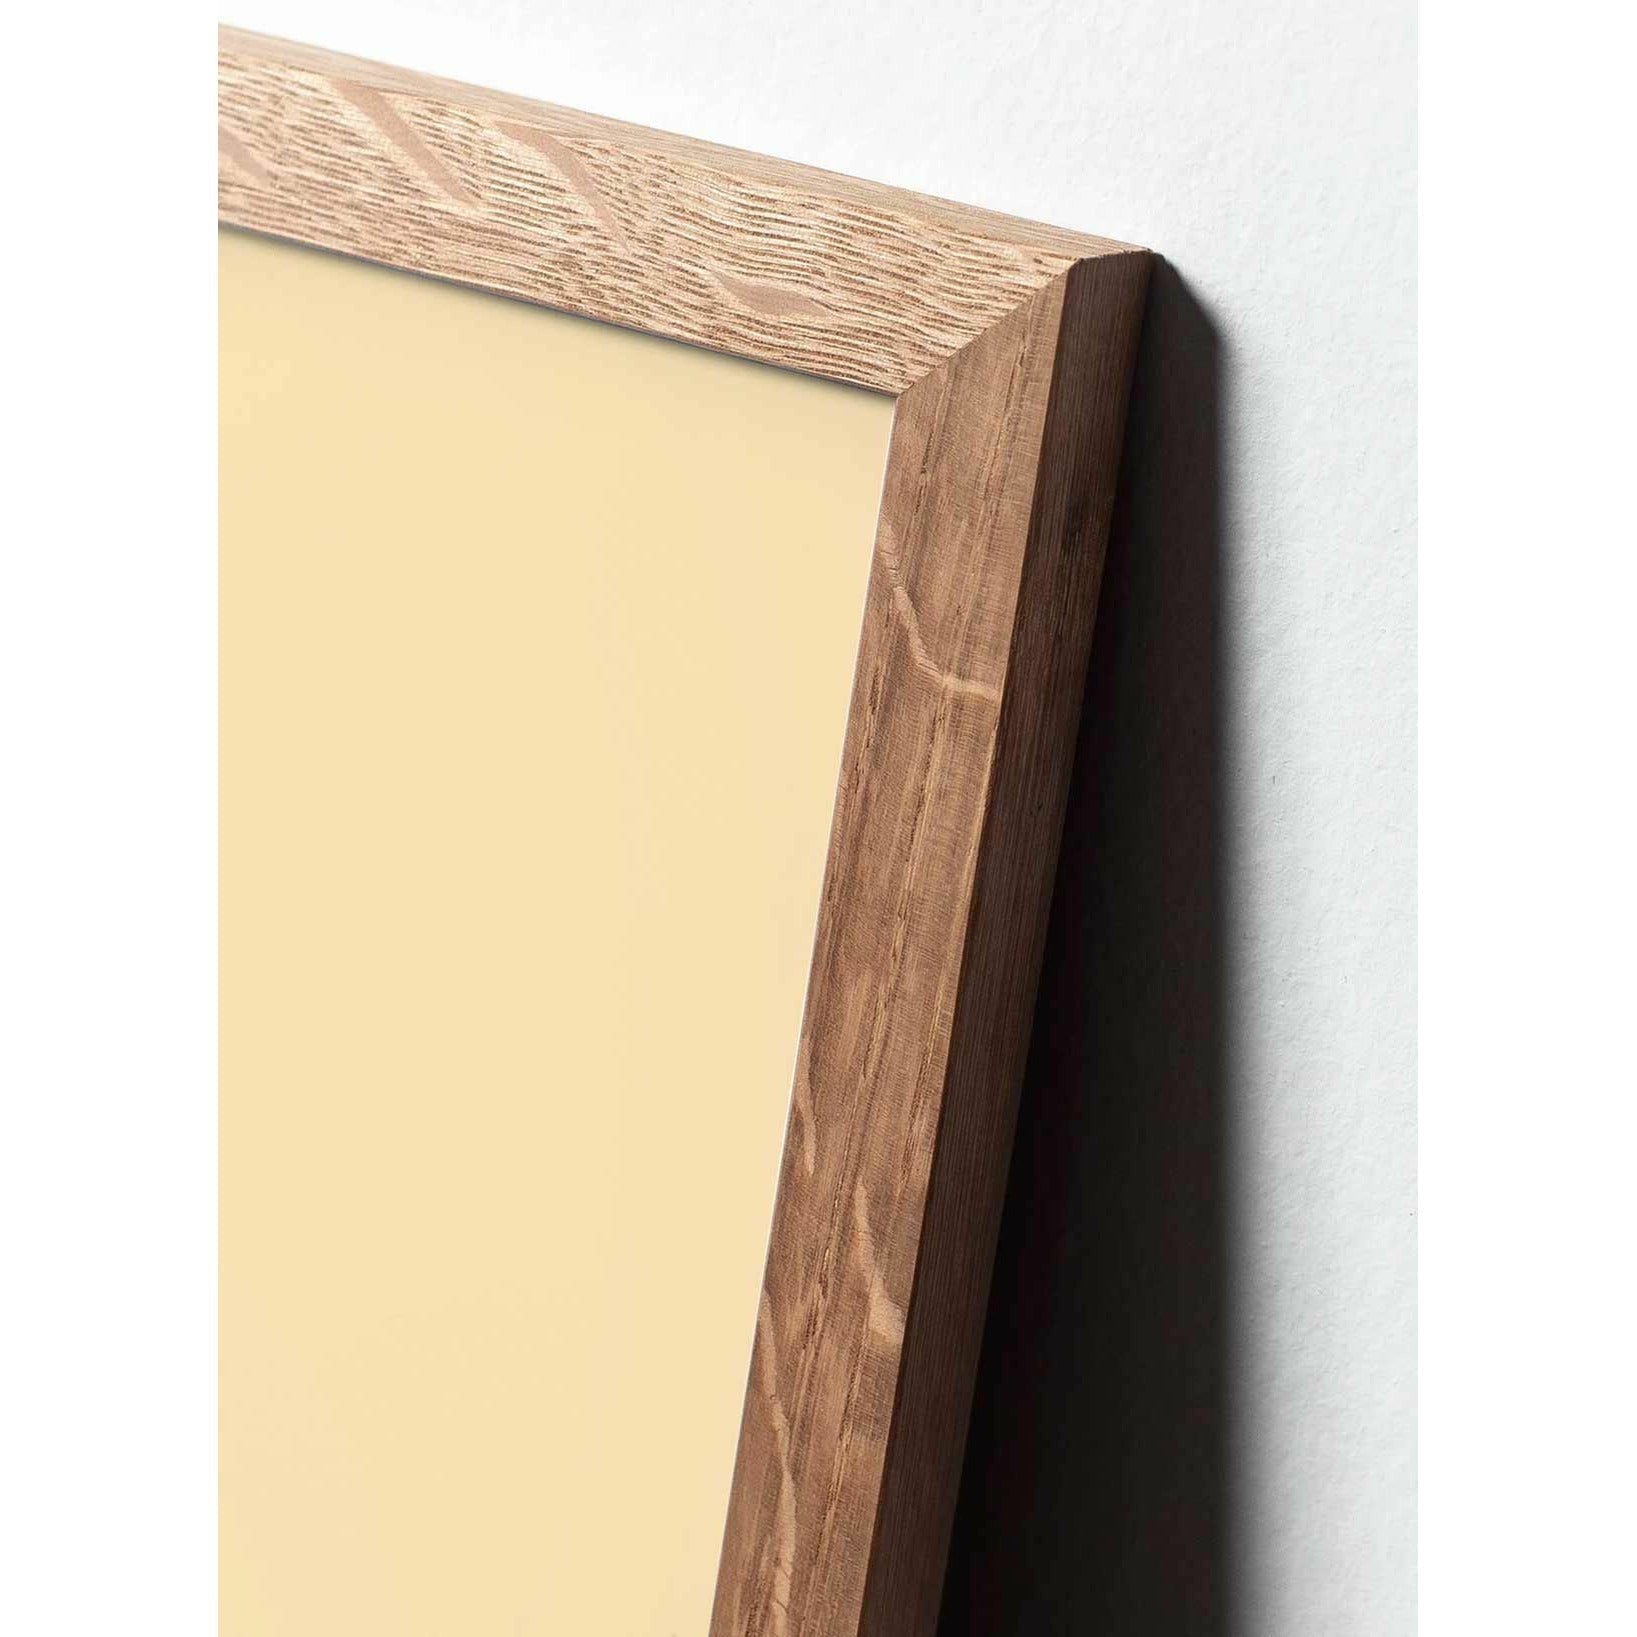 Póster clásico de creación de caída, marco hecho de madera clara de 30x40 cm, fondo de color arena